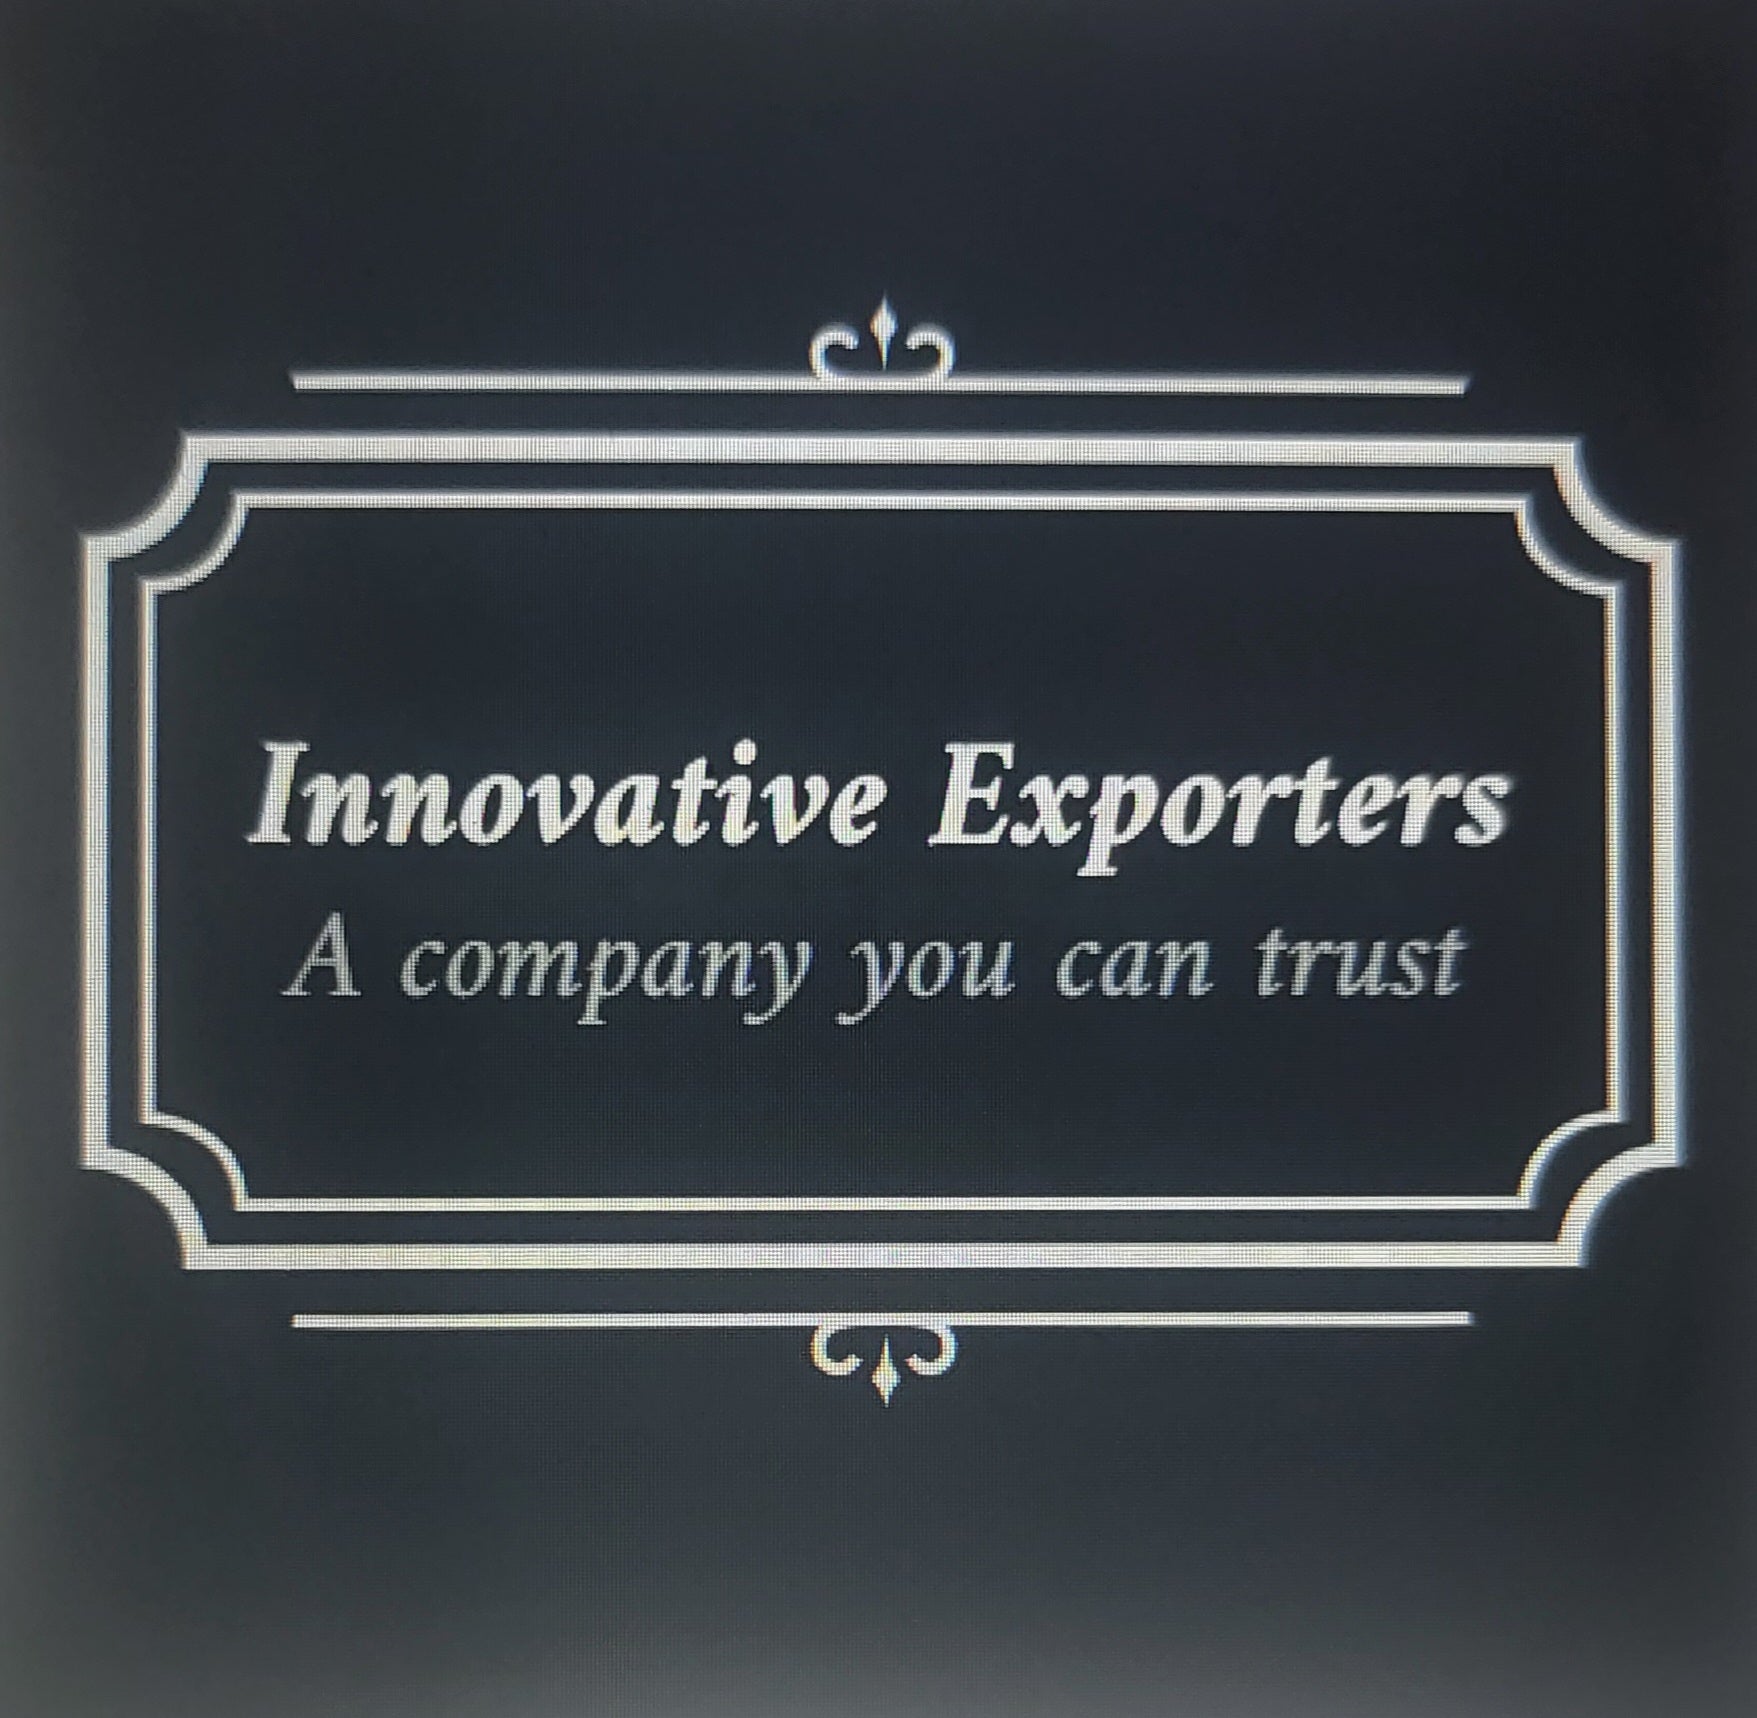 Innovative exporters